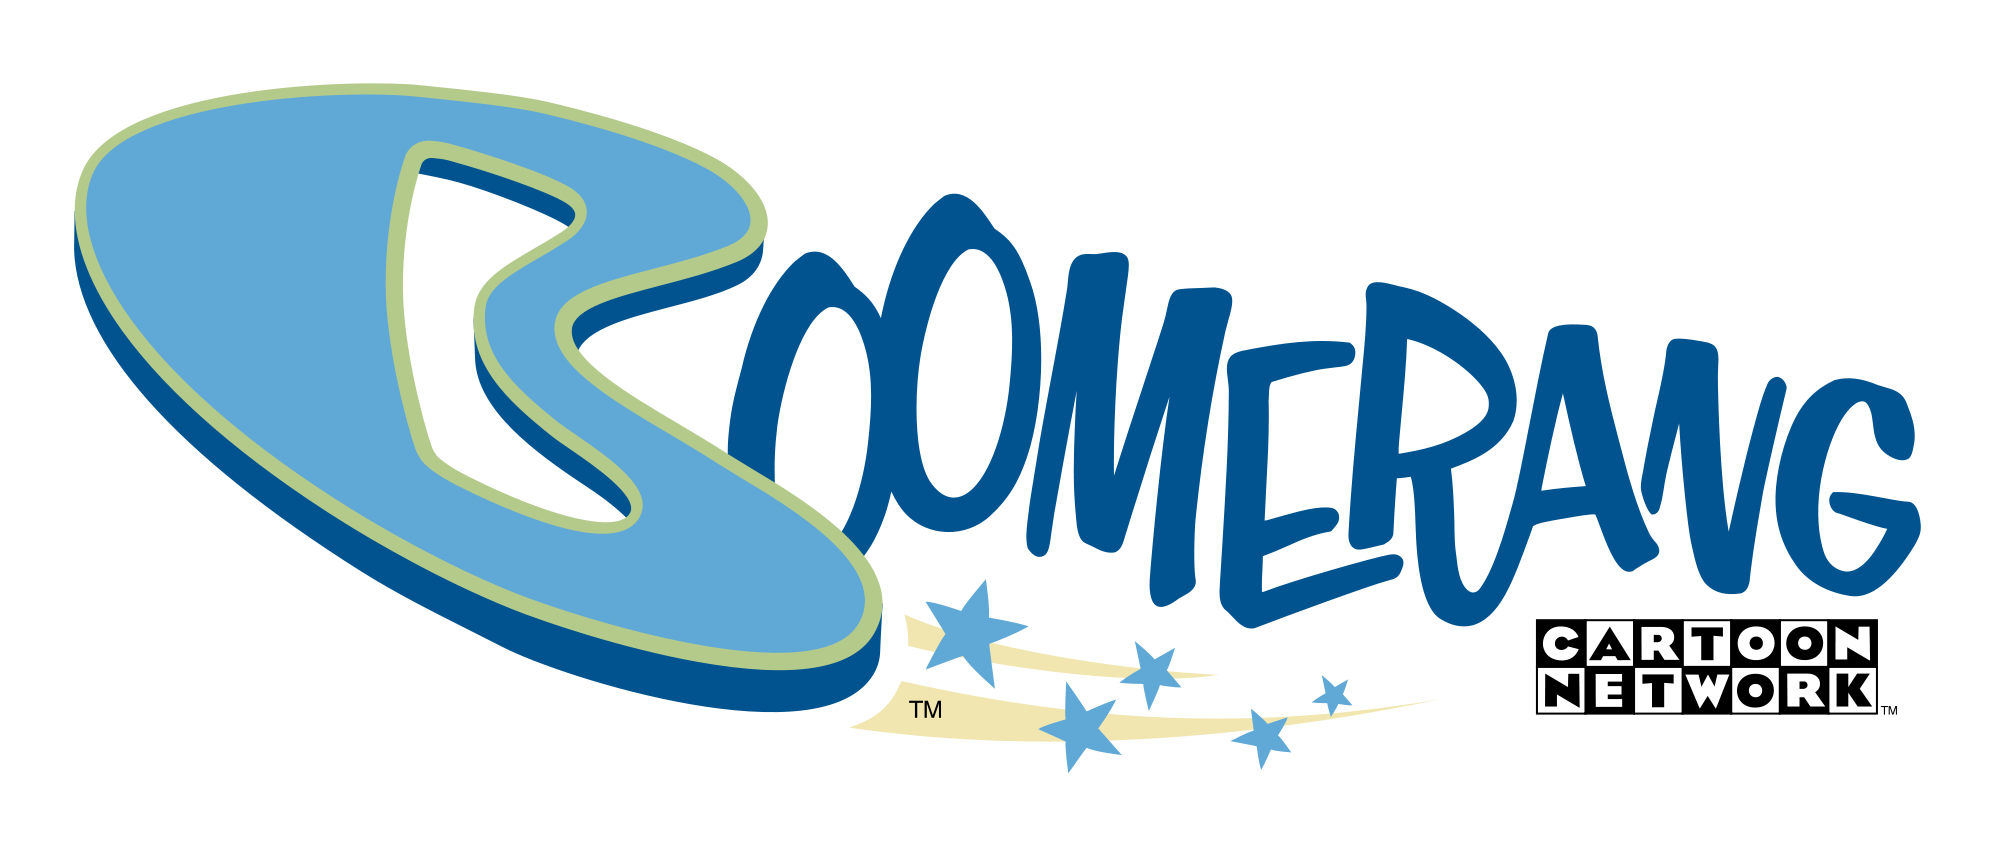 Cartoon, Logos and Boomerang cartoon network